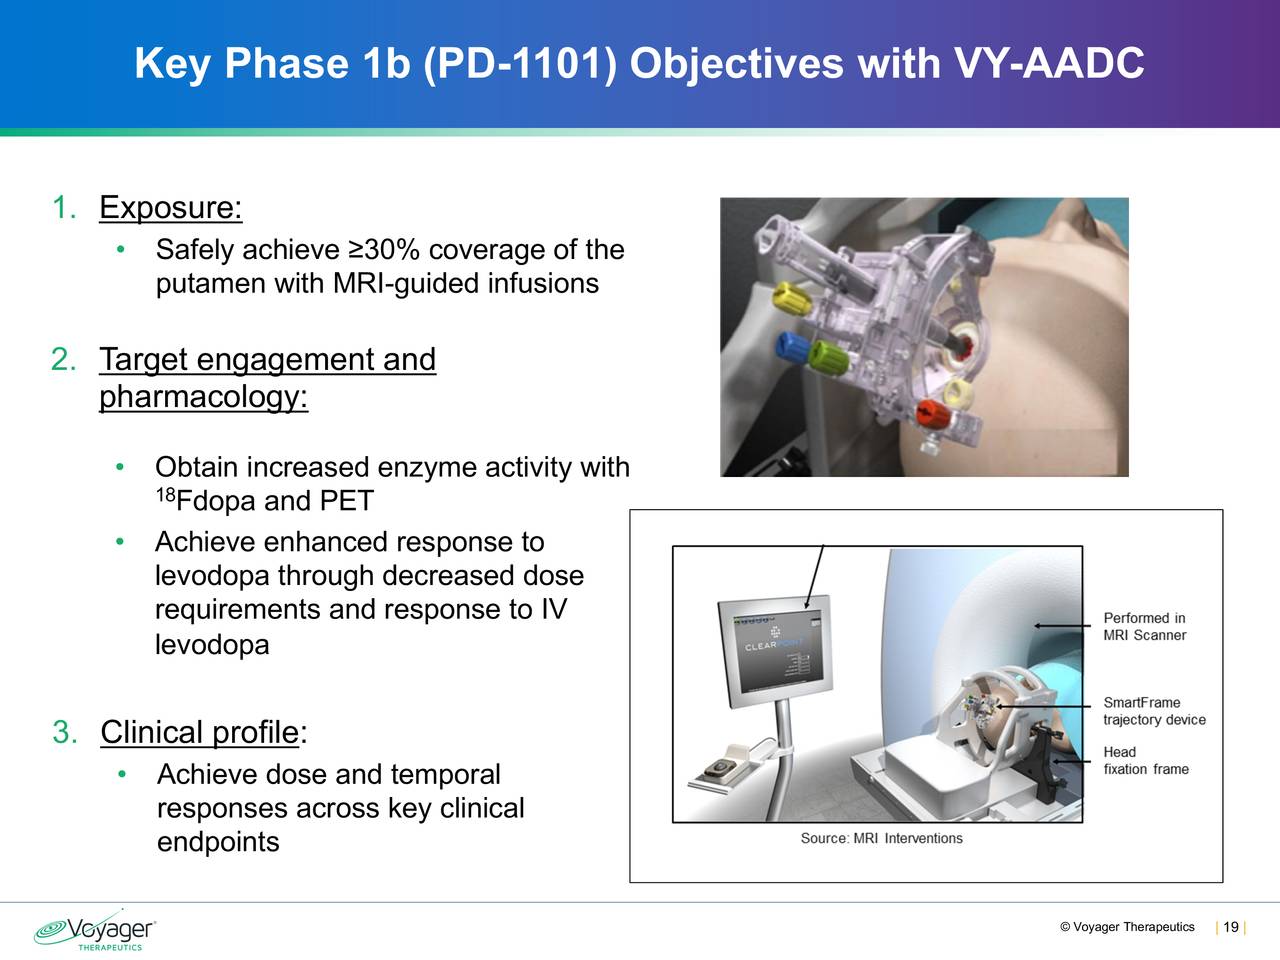 Key Phase 1b (PD-1101) Objectives with V                      -AYADC